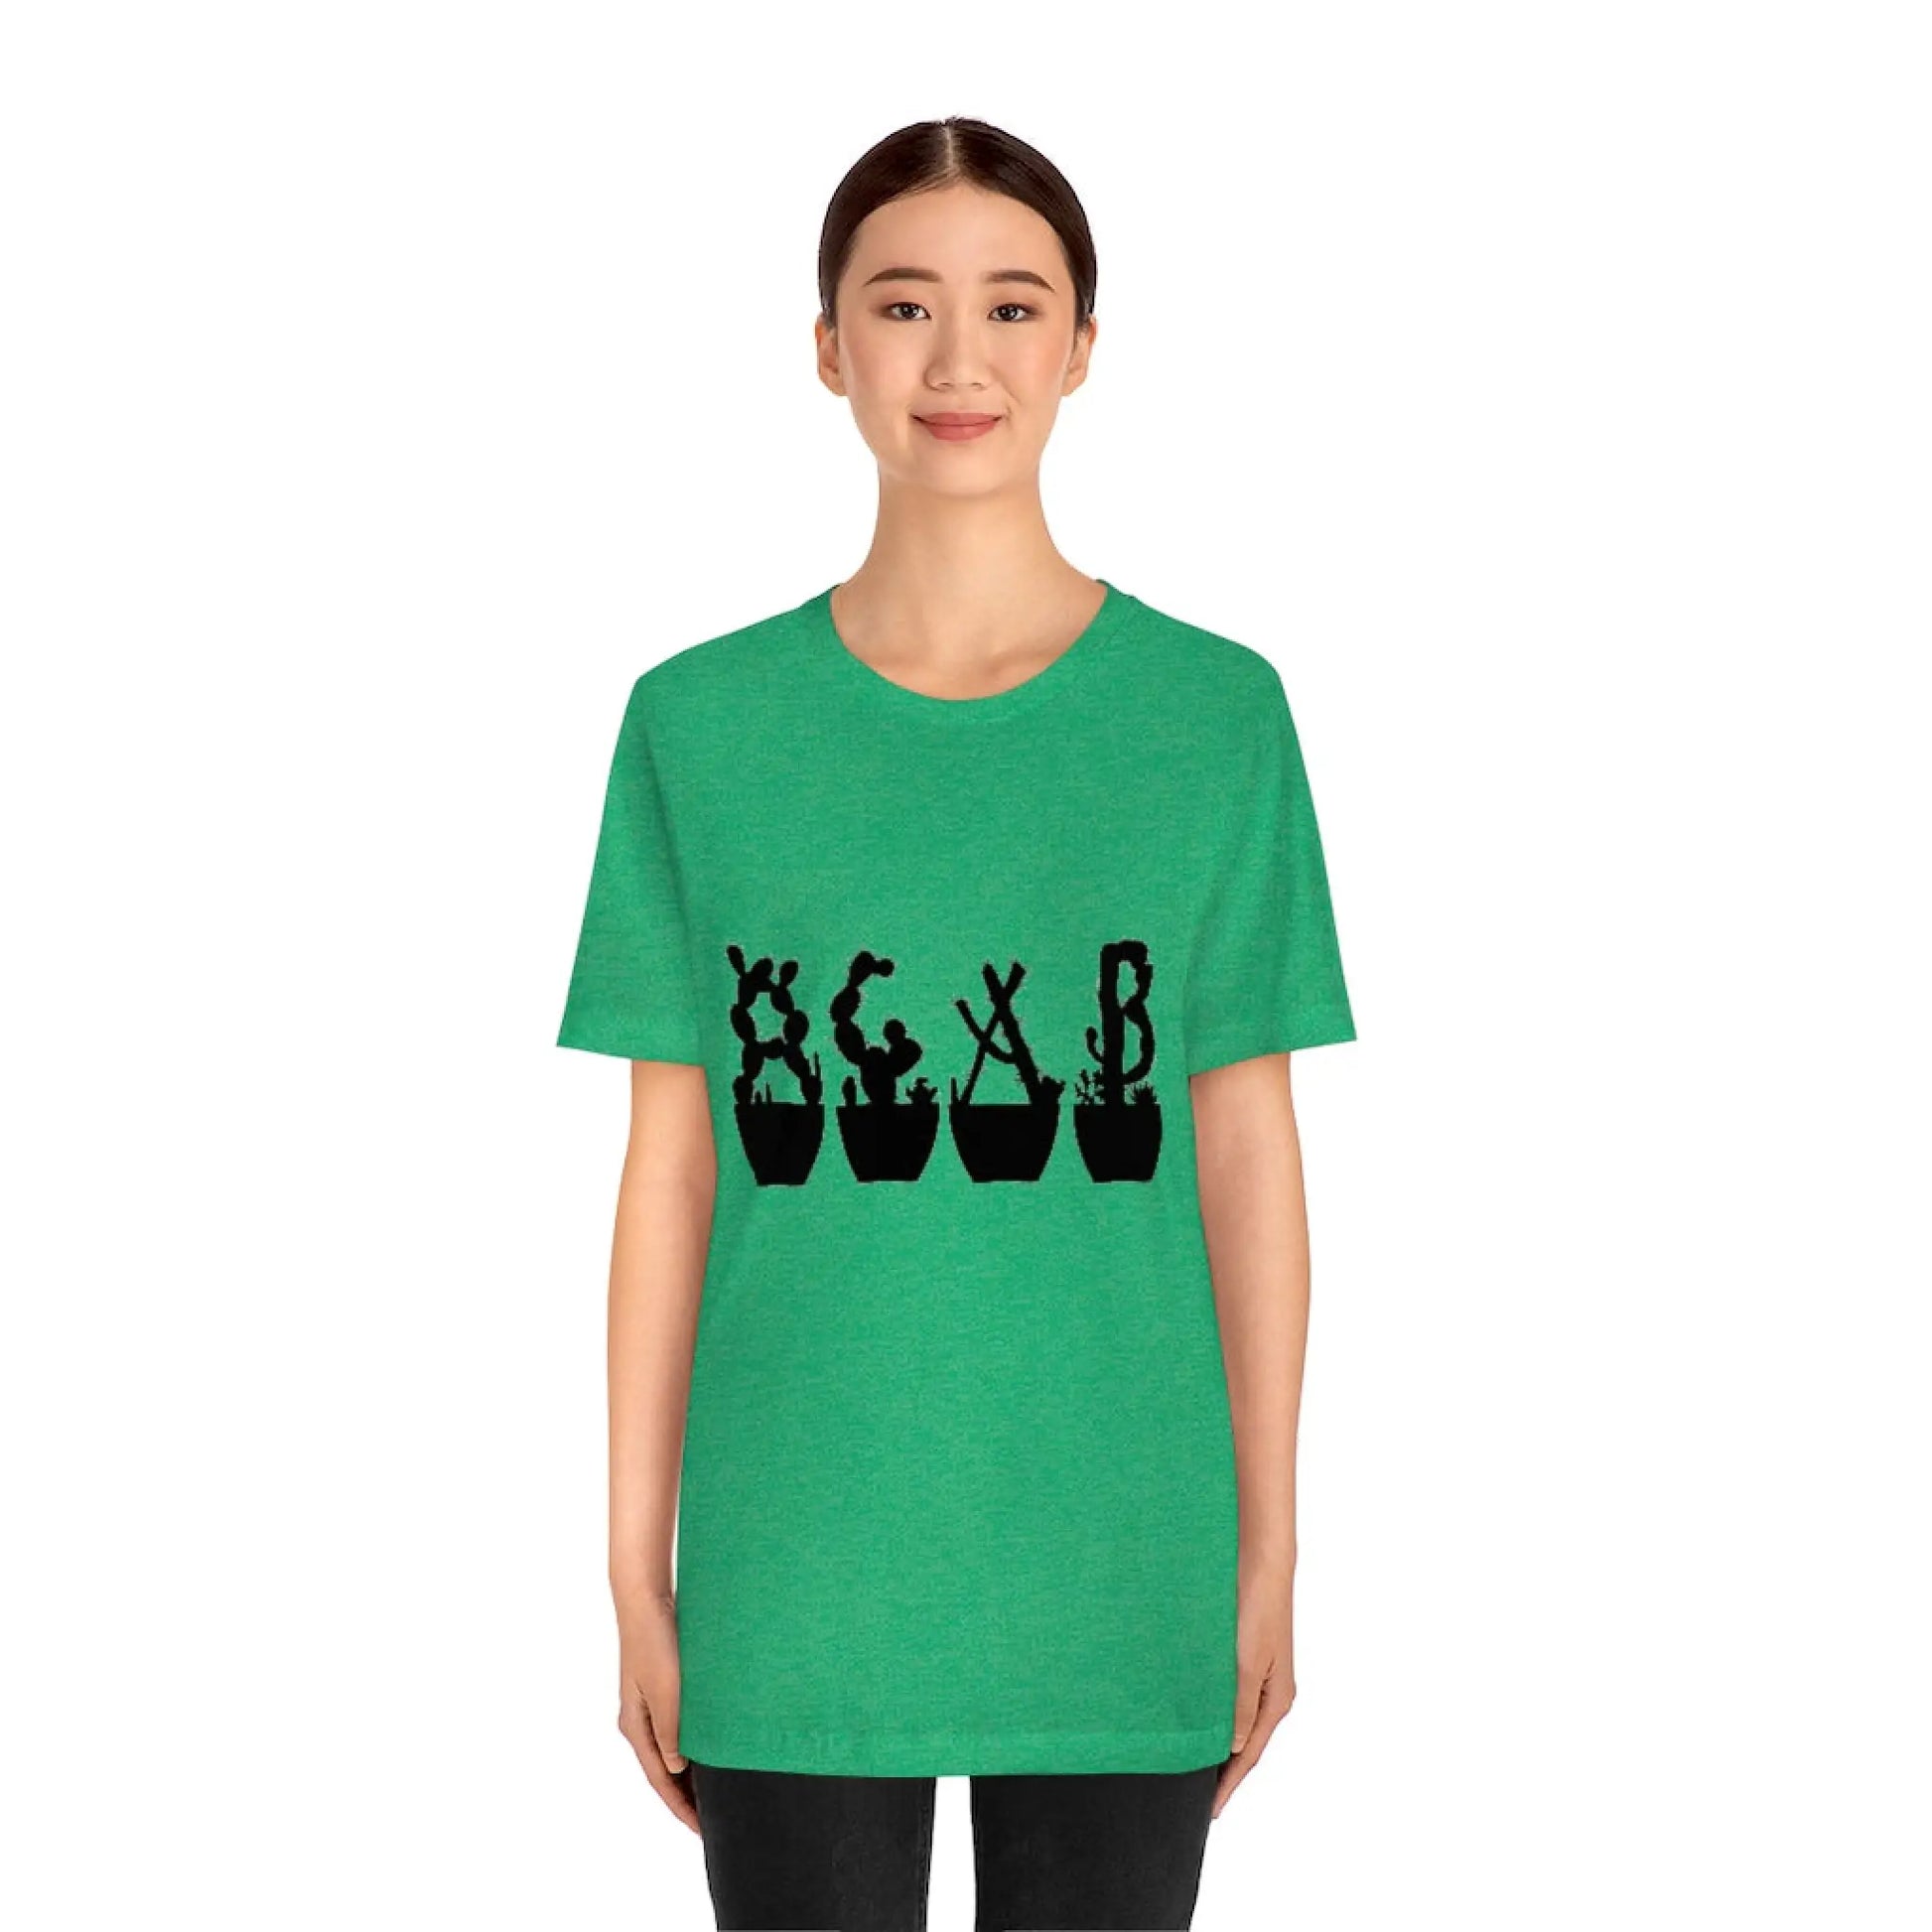 Shirts - Just Beautiful Cactuses - T-Shirt